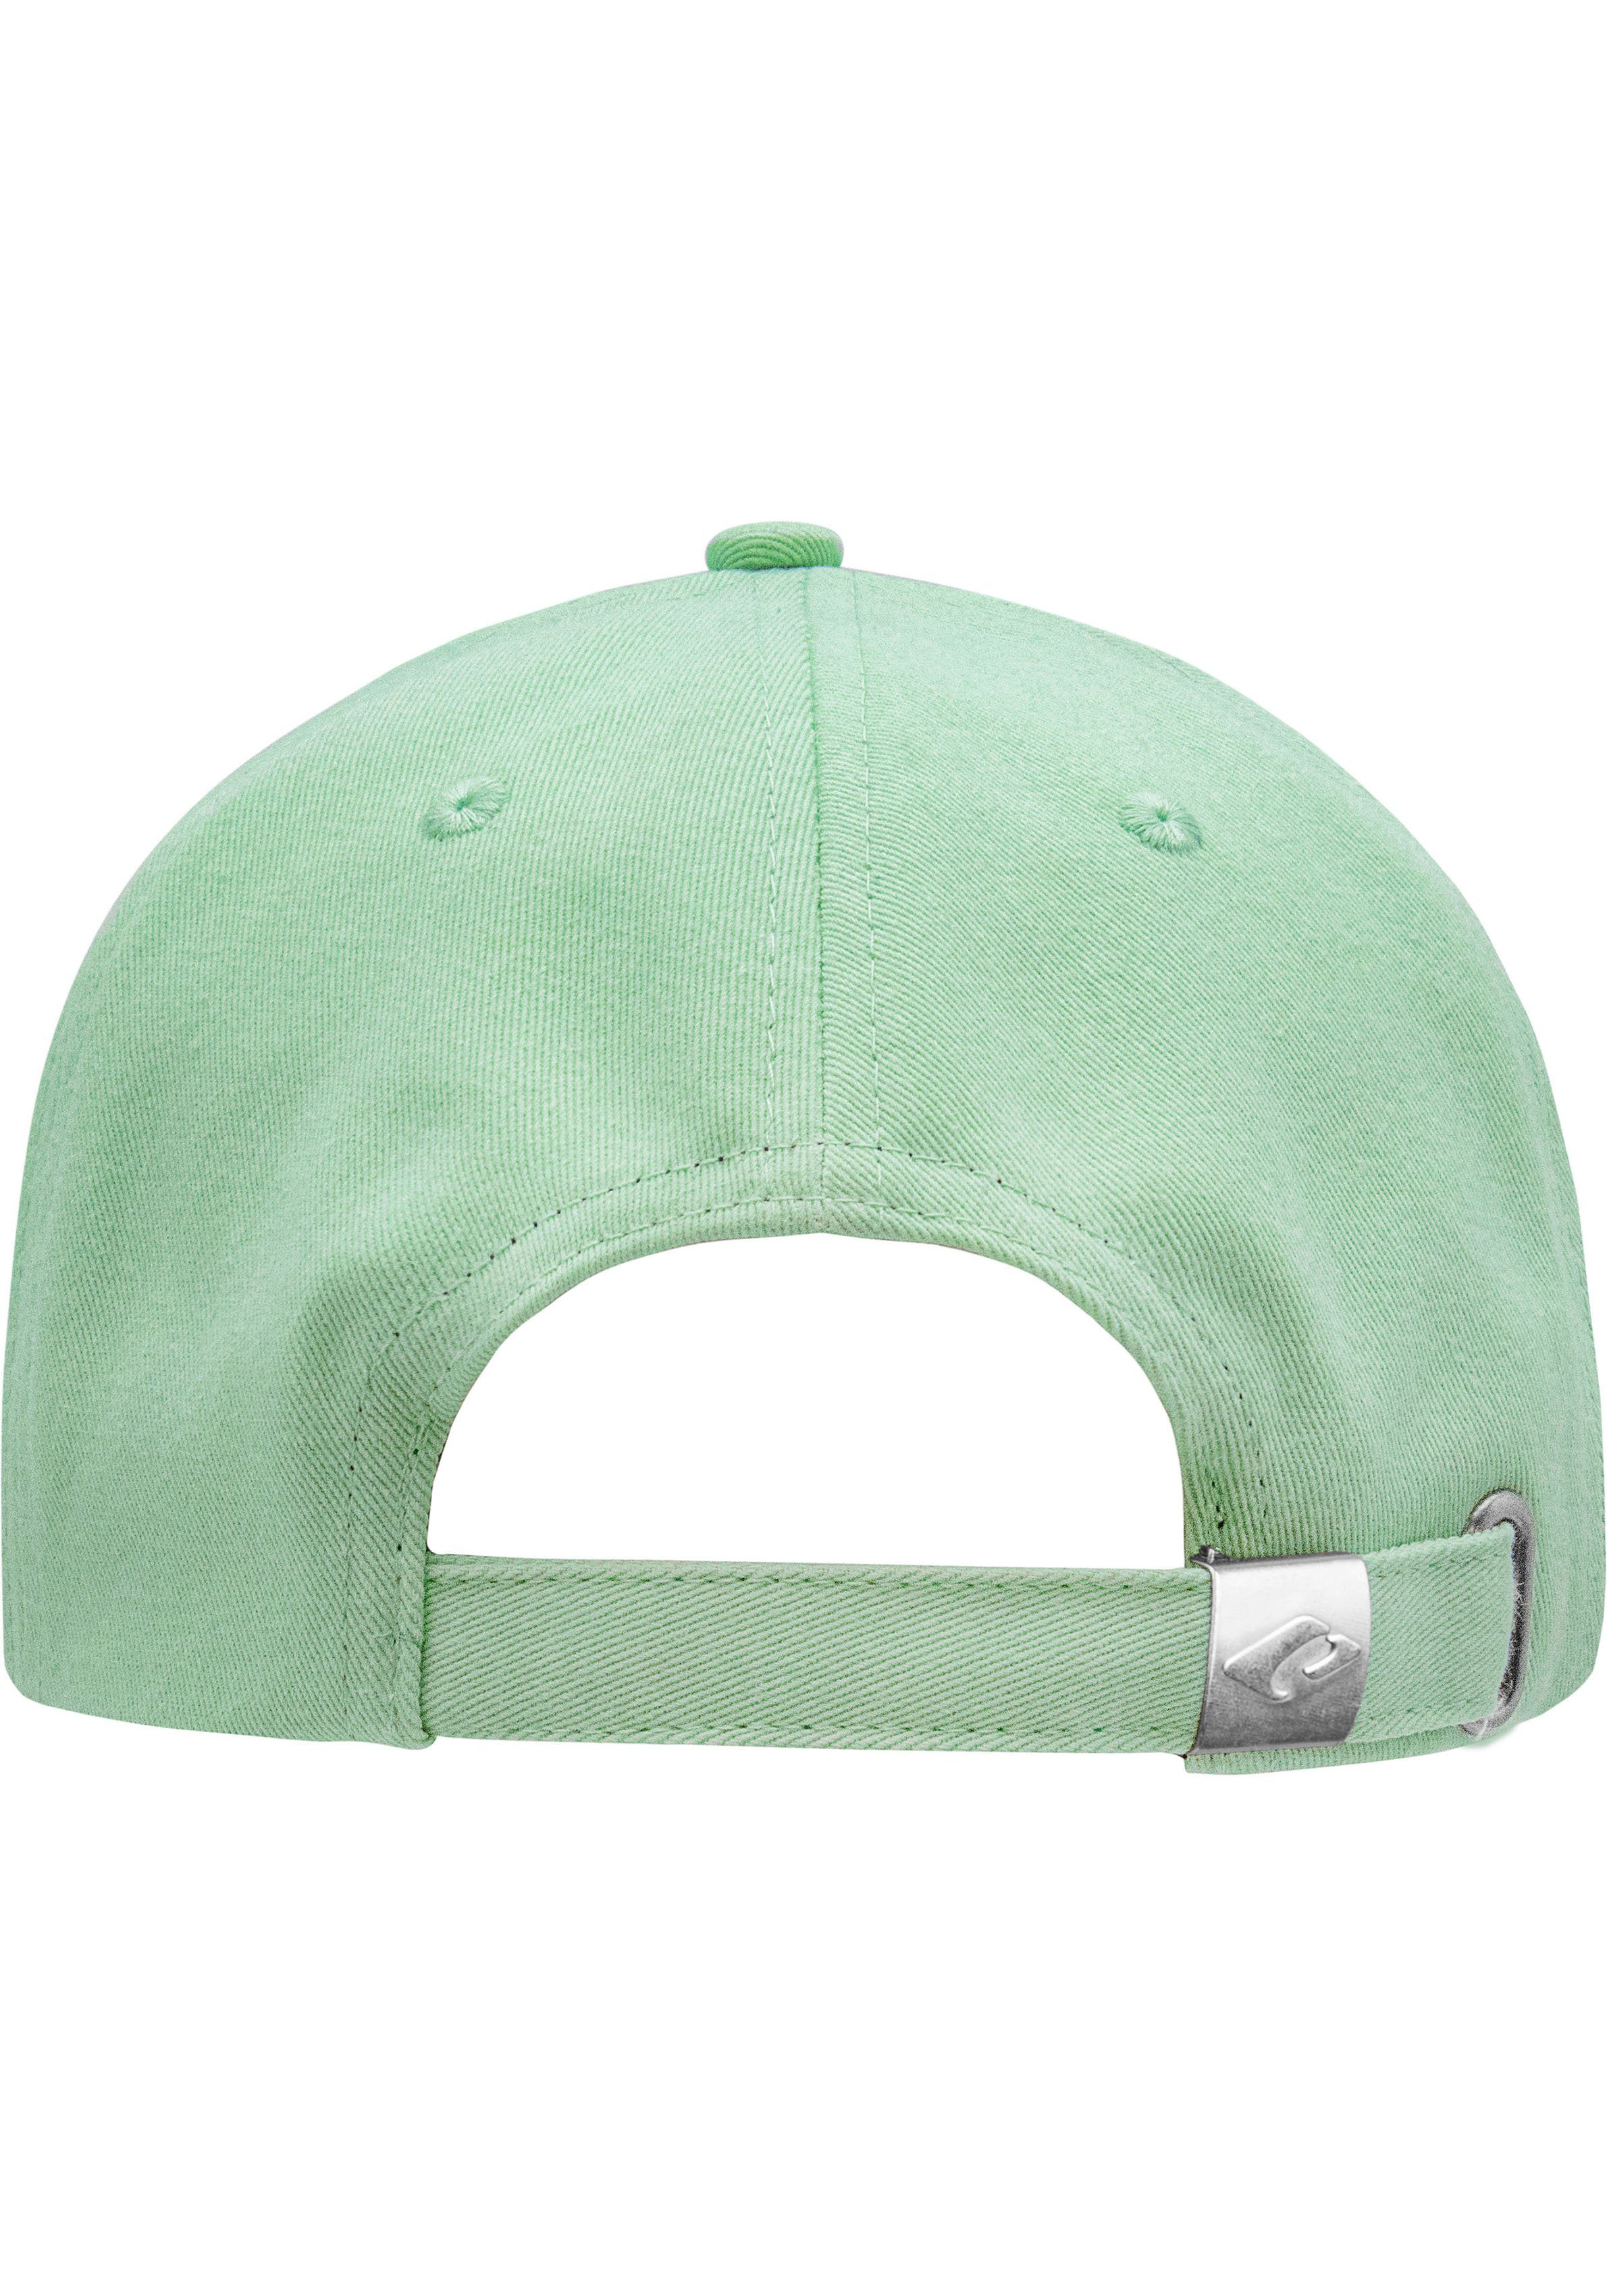 Arklow Cap mint Baseball Hat chillouts